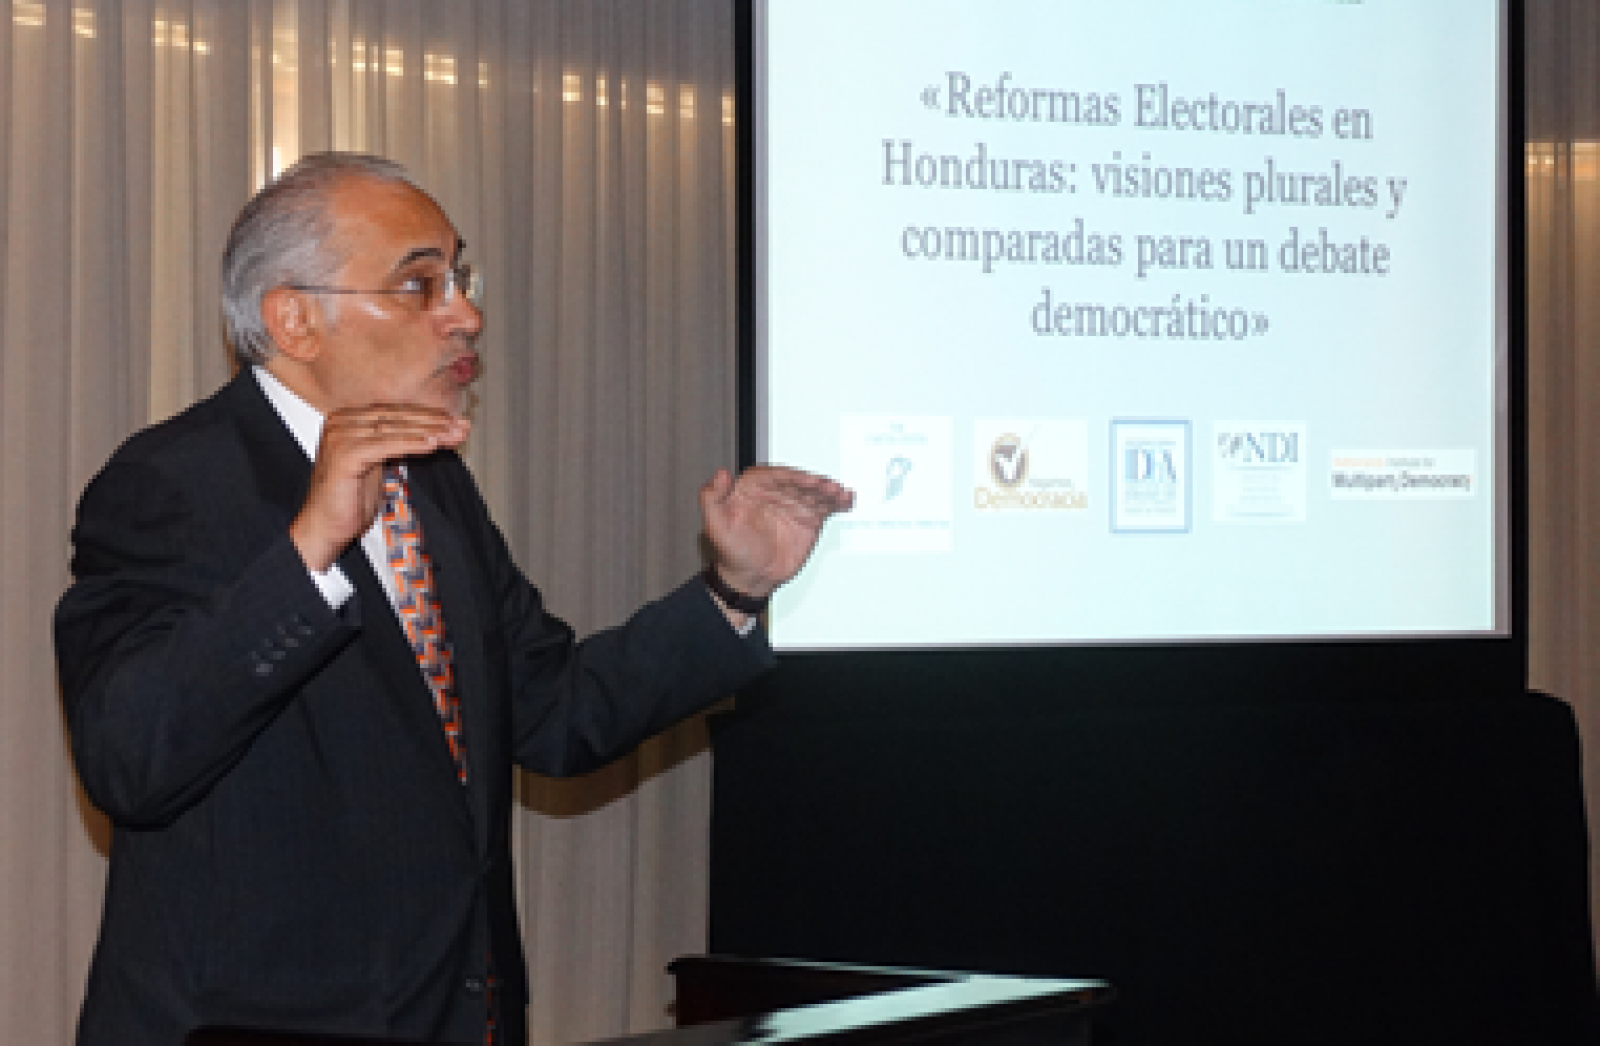 International Seminar Prepares Hondurans for Electoral Reform